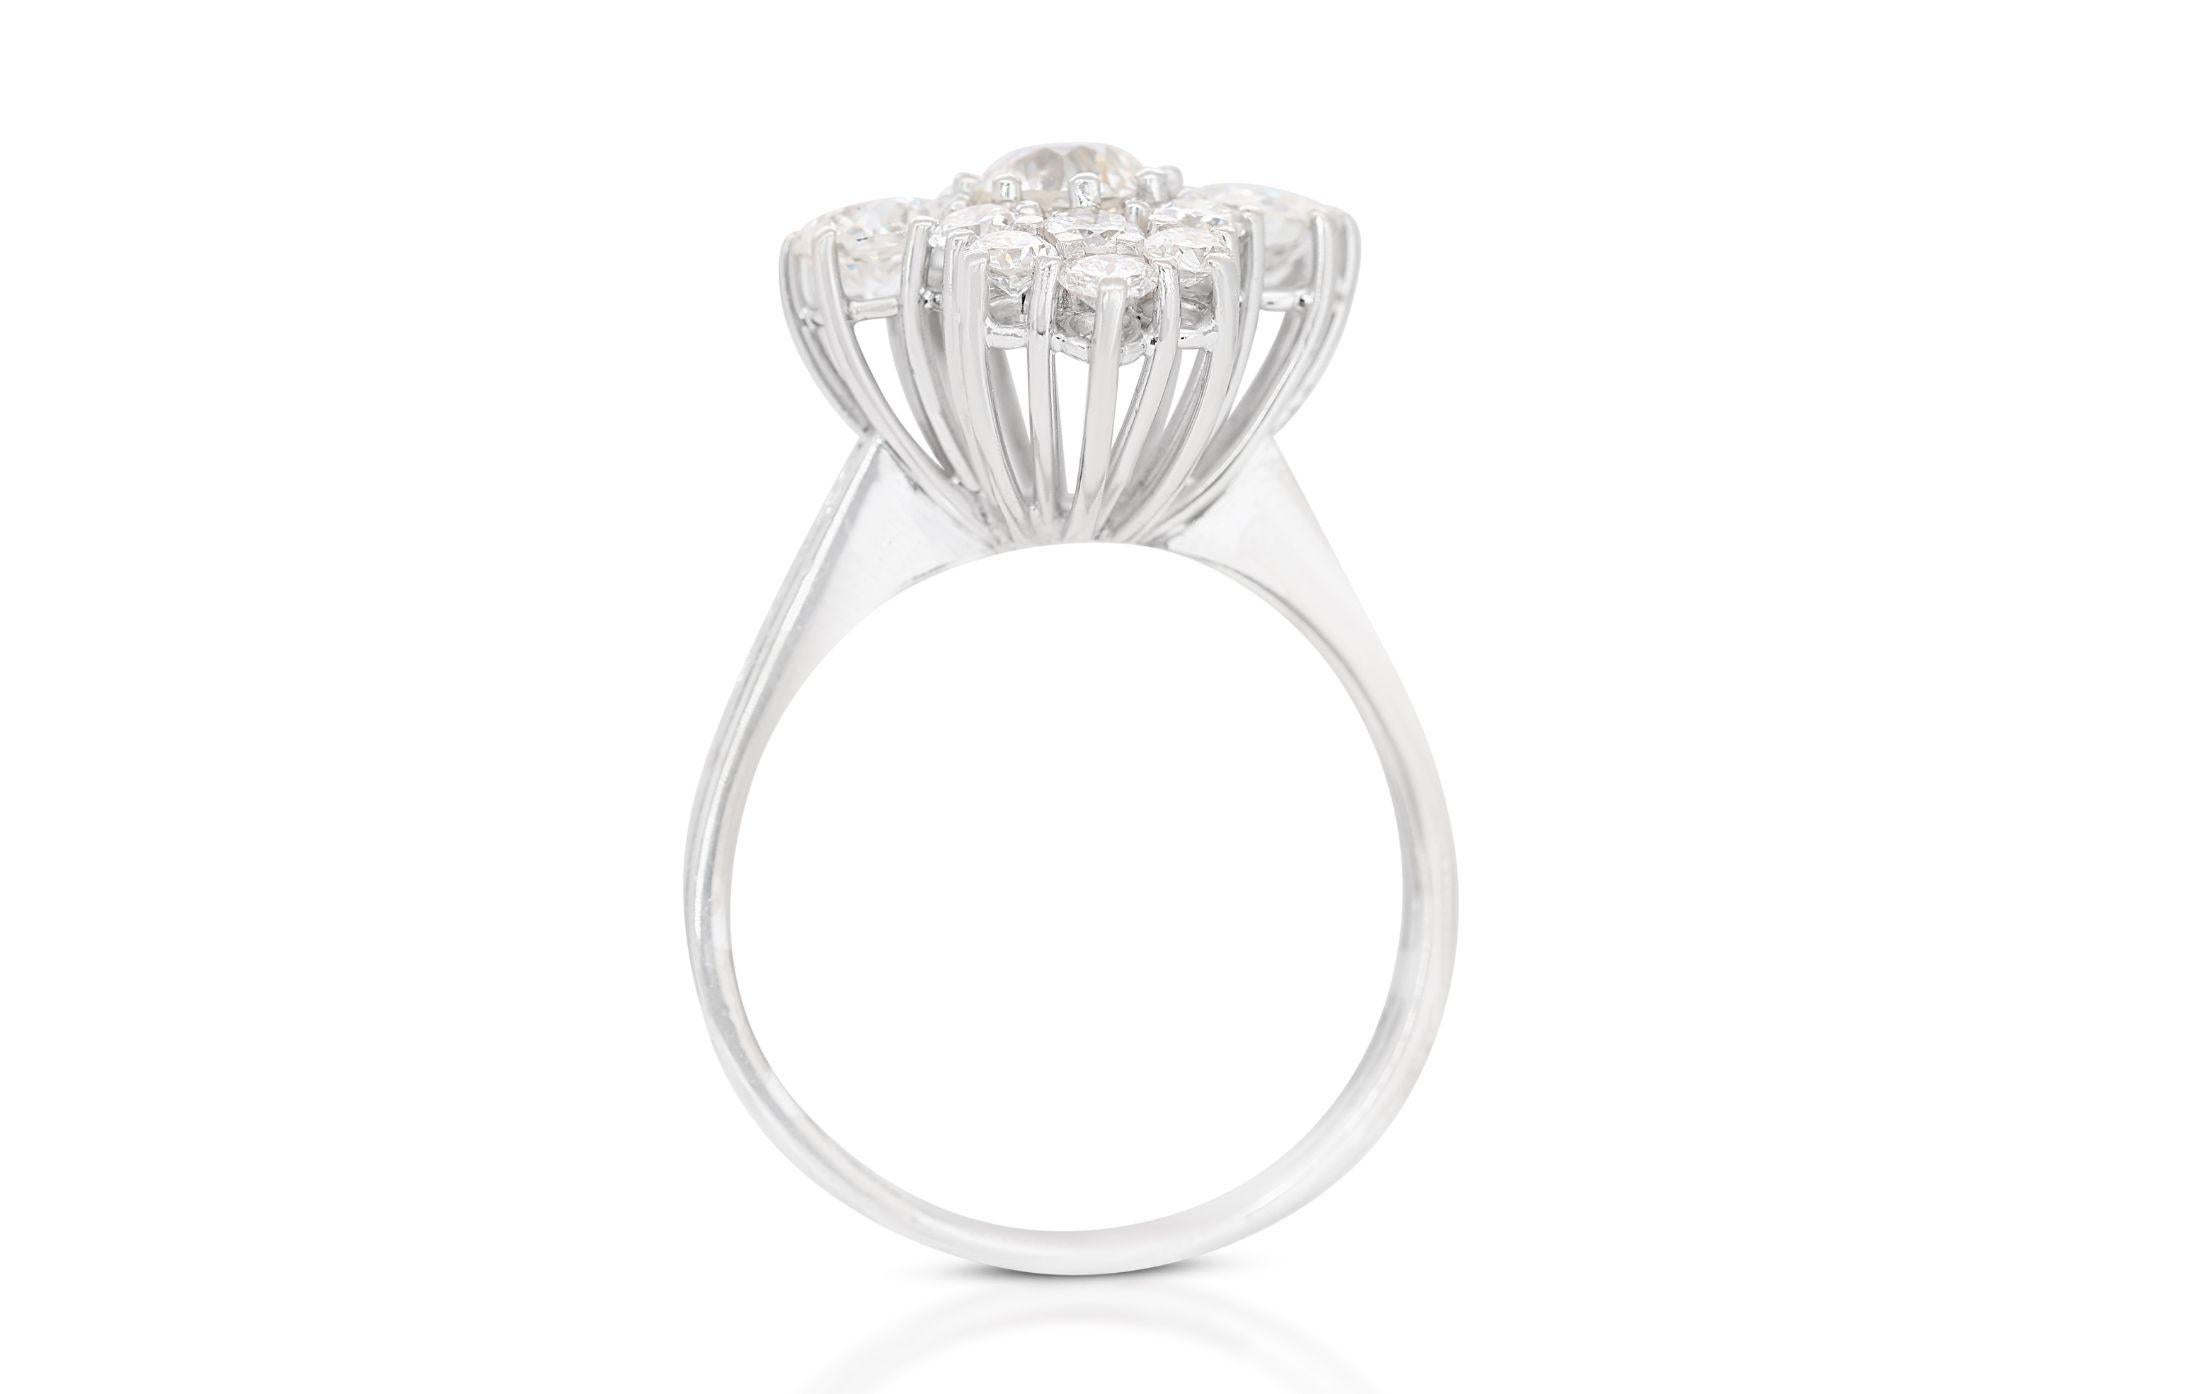 Sparkling 1.70ct Diamond Ring set in 14K White Gold For Sale 1